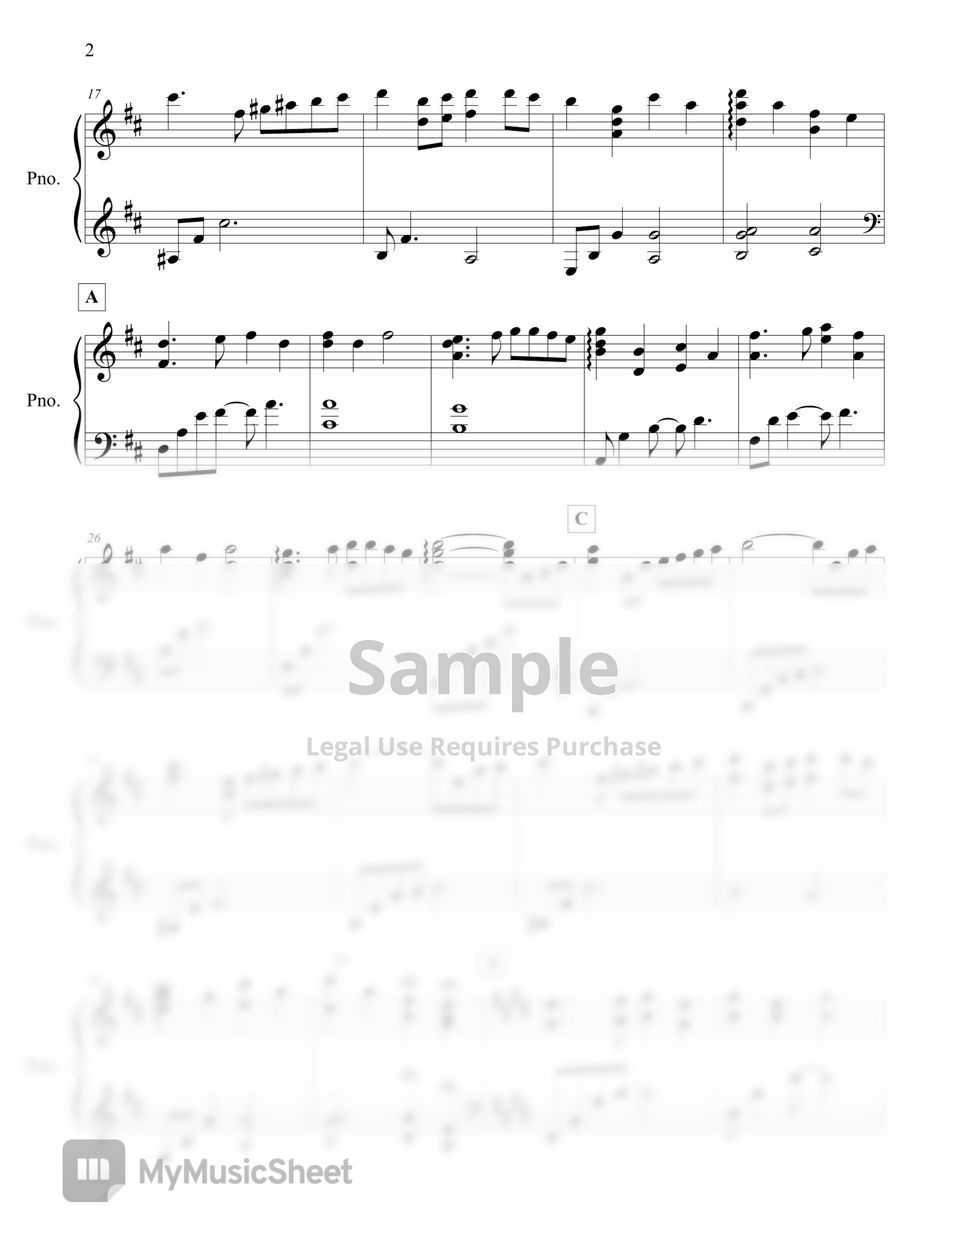 sound-of-music-do-re-mi-lembar-musik-by-pianist-keunyoung-song